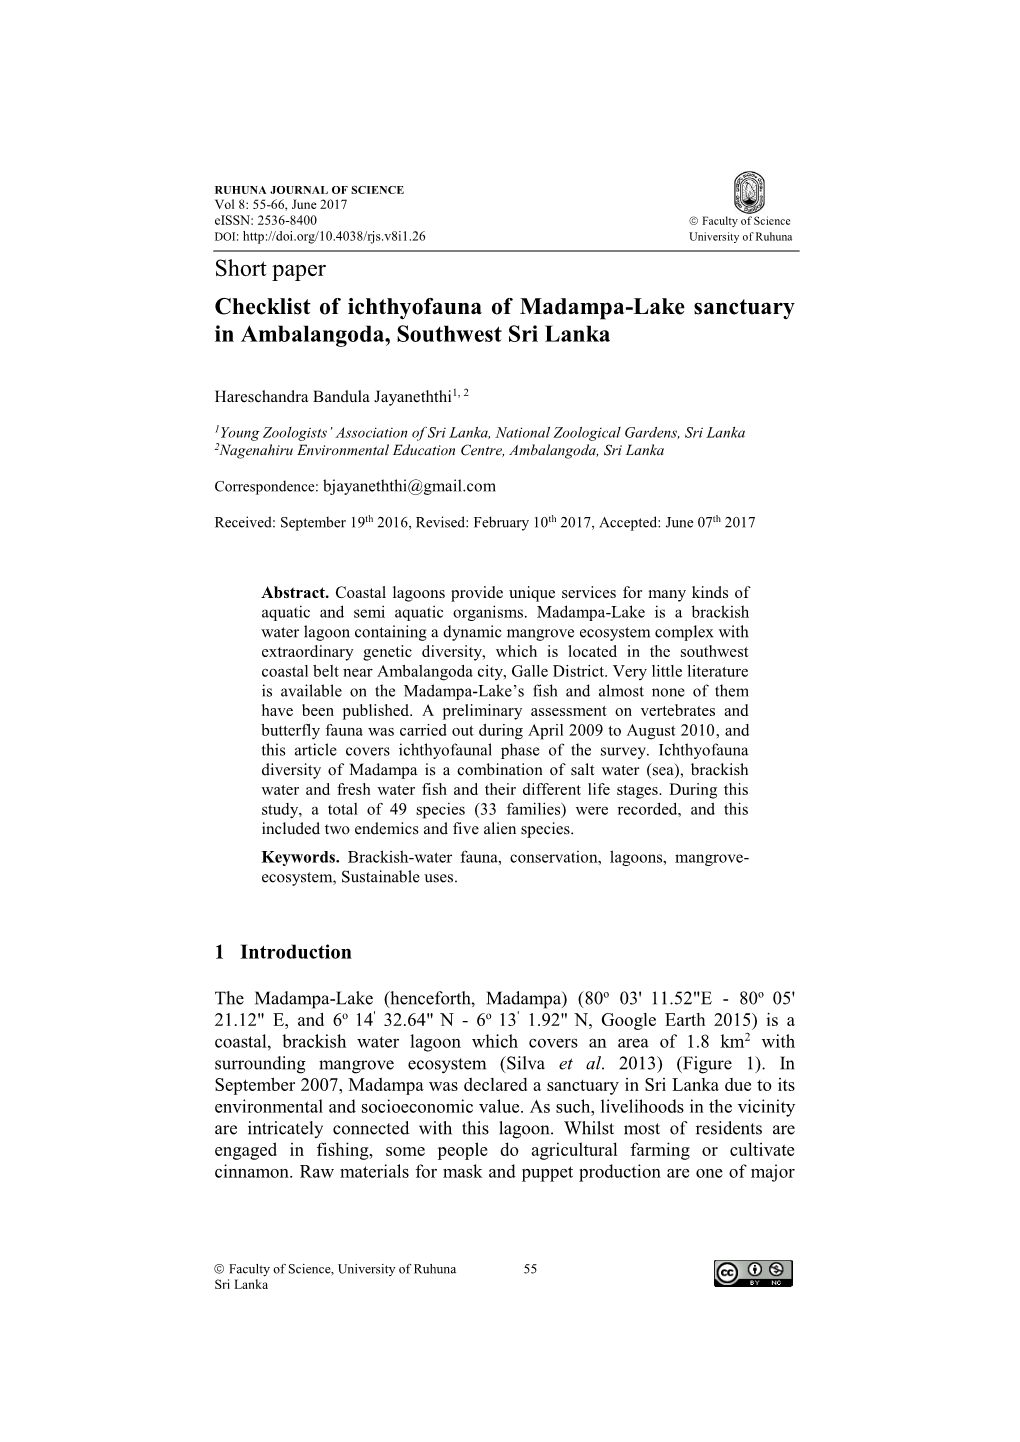 Short Paper Checklist of Ichthyofauna of Madampa-Lake Sanctuary in Ambalangoda, Southwest Sri Lanka